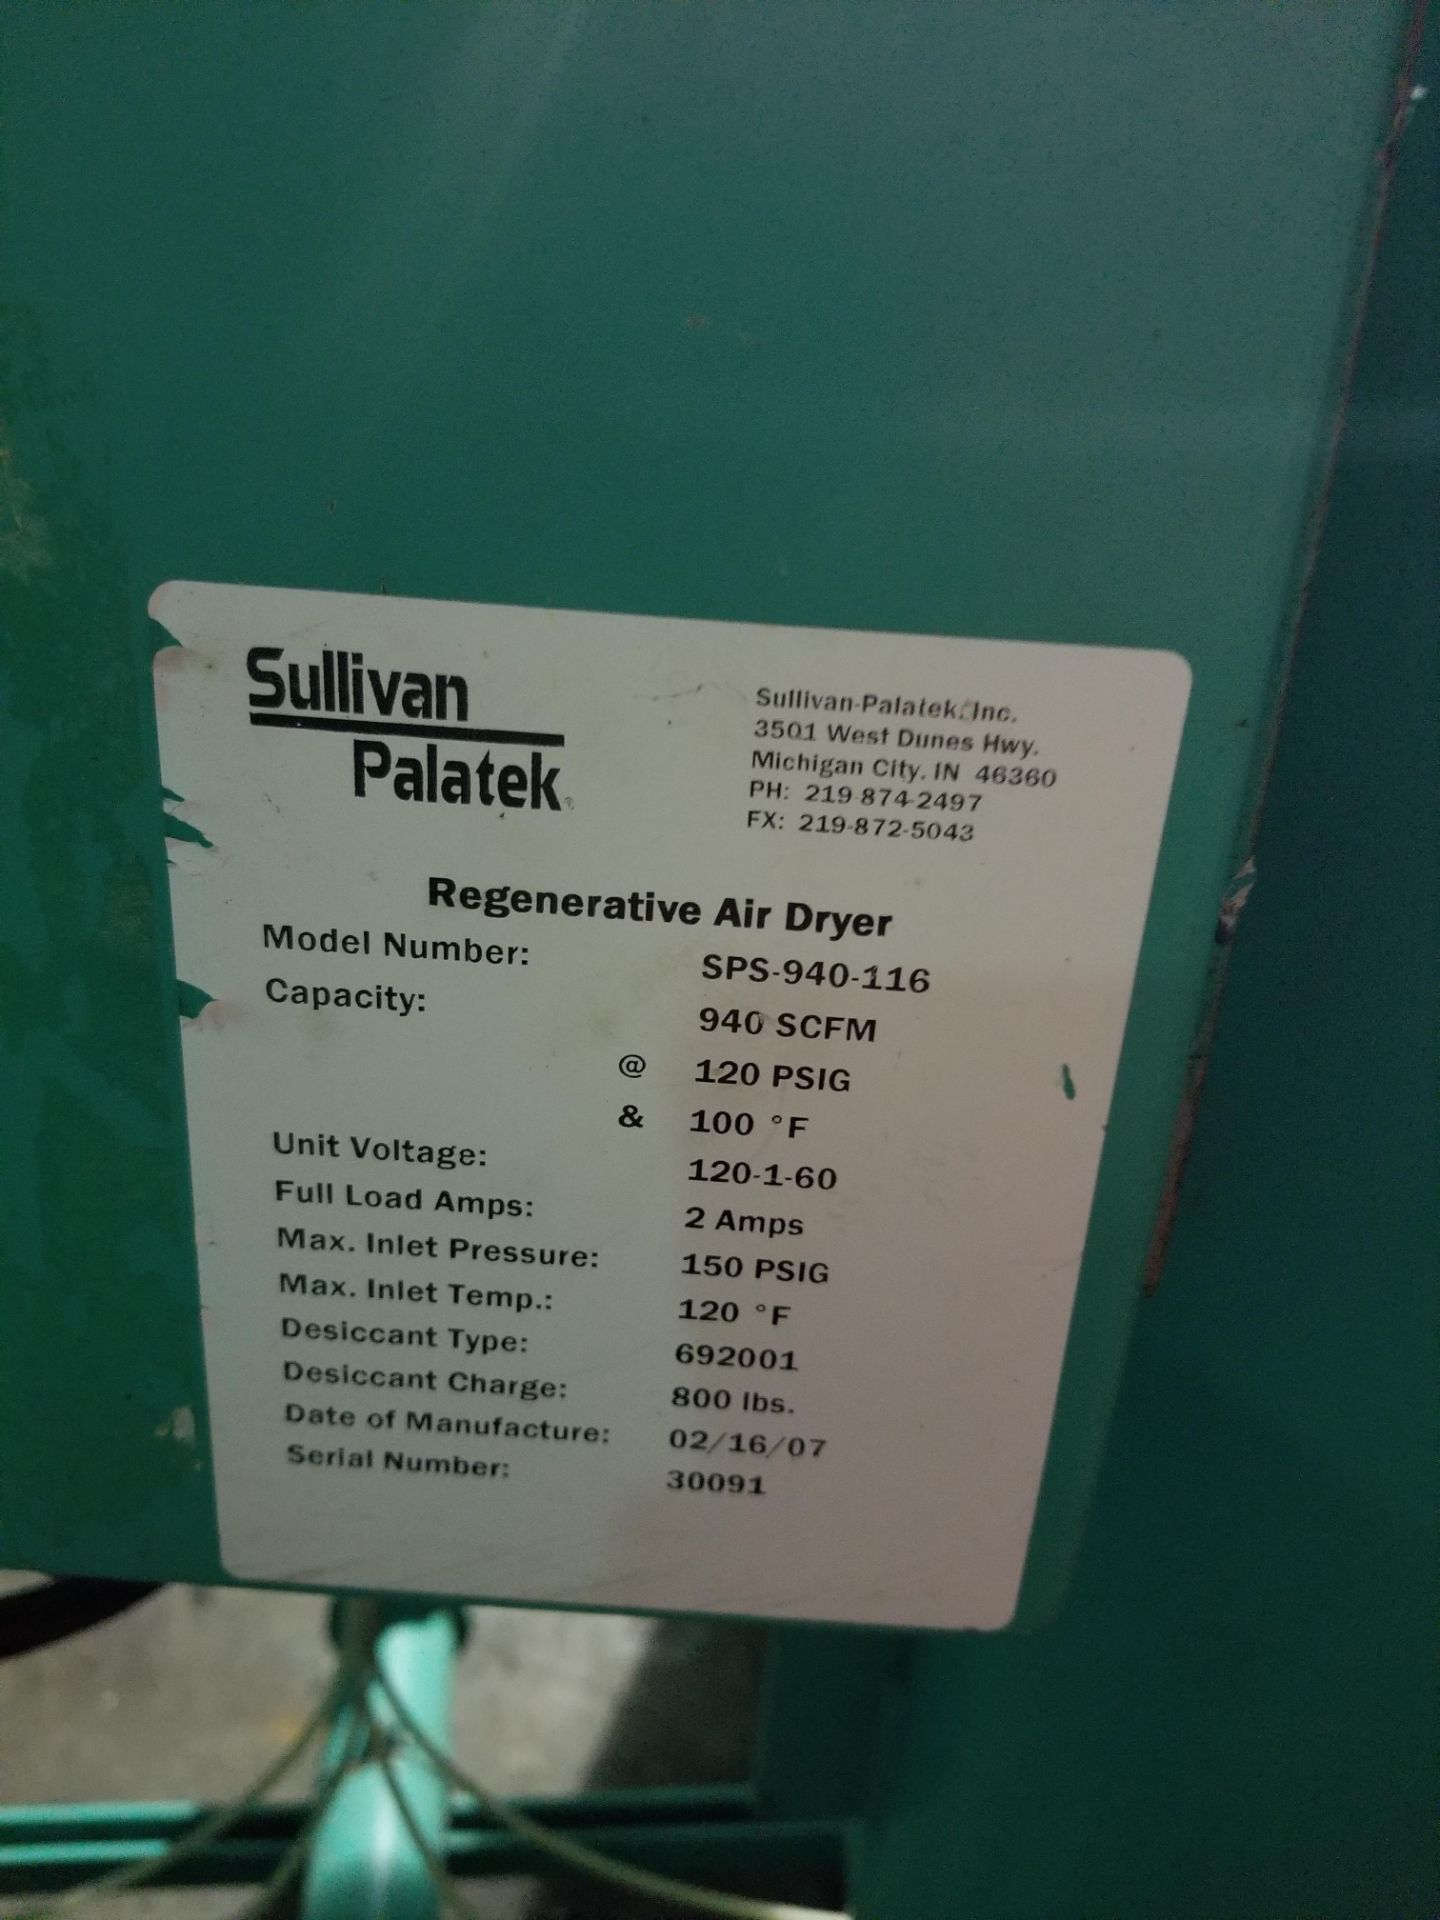 Sullivan Palatek 200UDG Rotary Screw Air Compressor with Dryer - Image 10 of 10